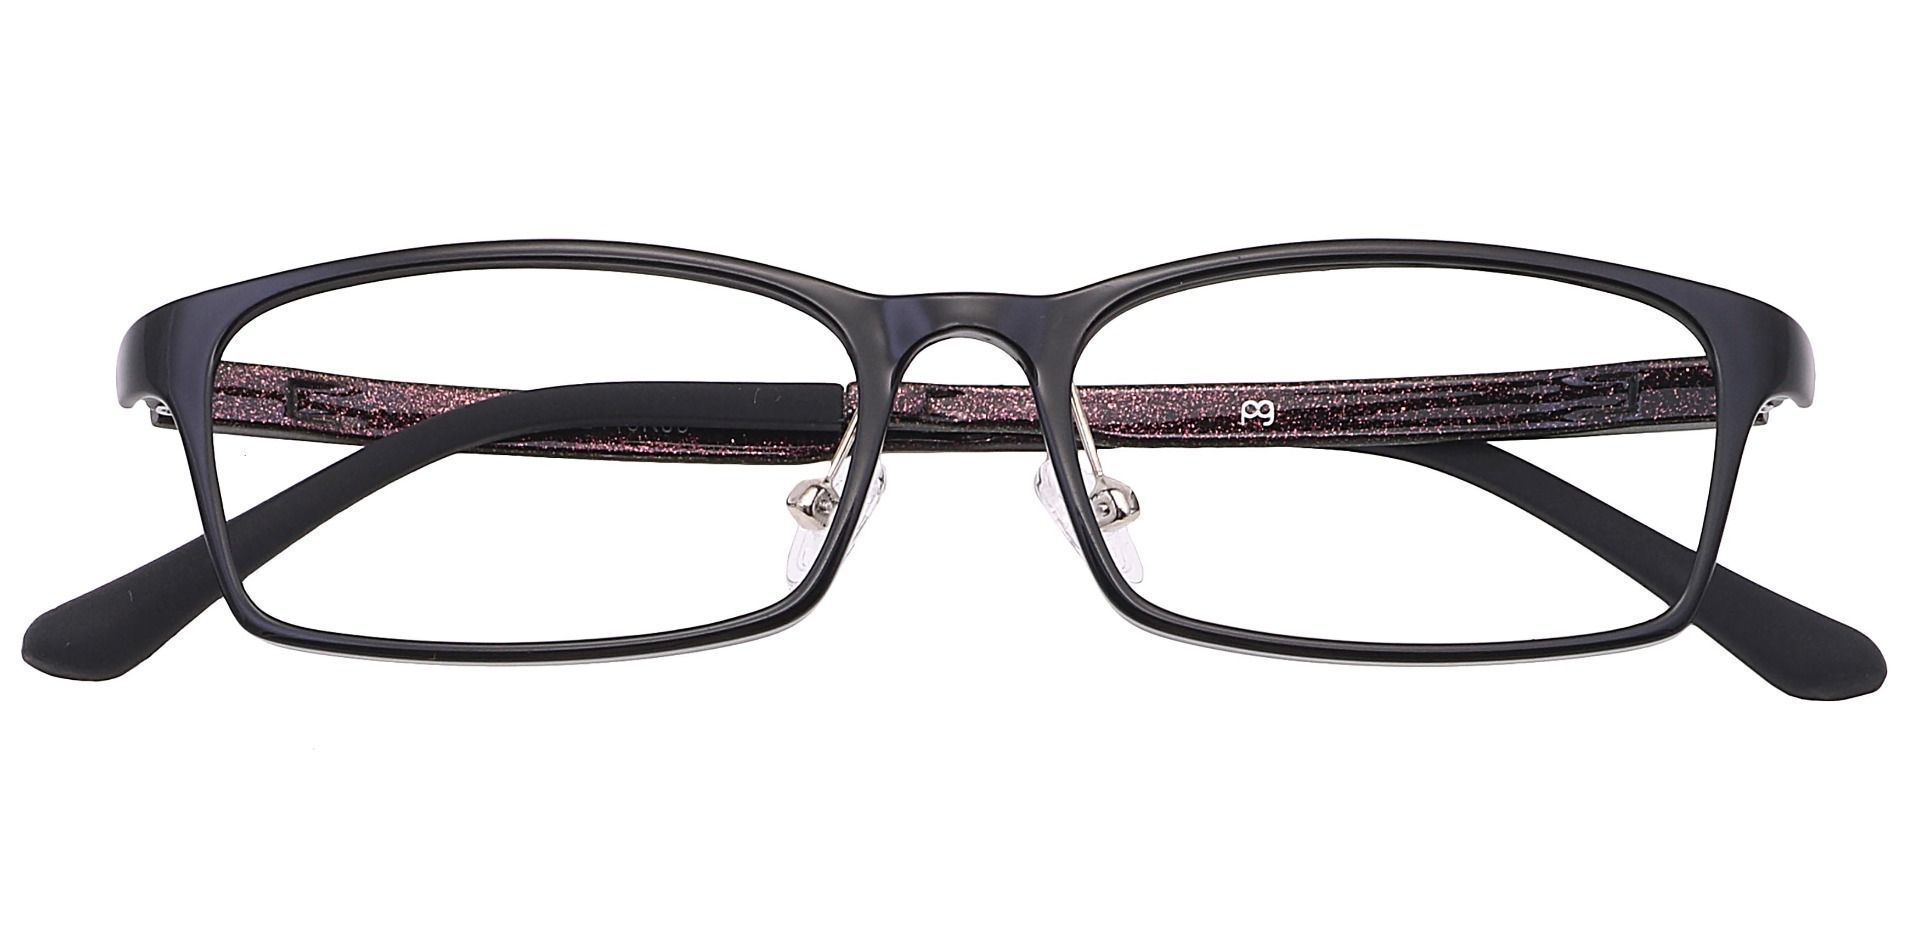 Hydra Rectangle Lined Bifocal Glasses - Black